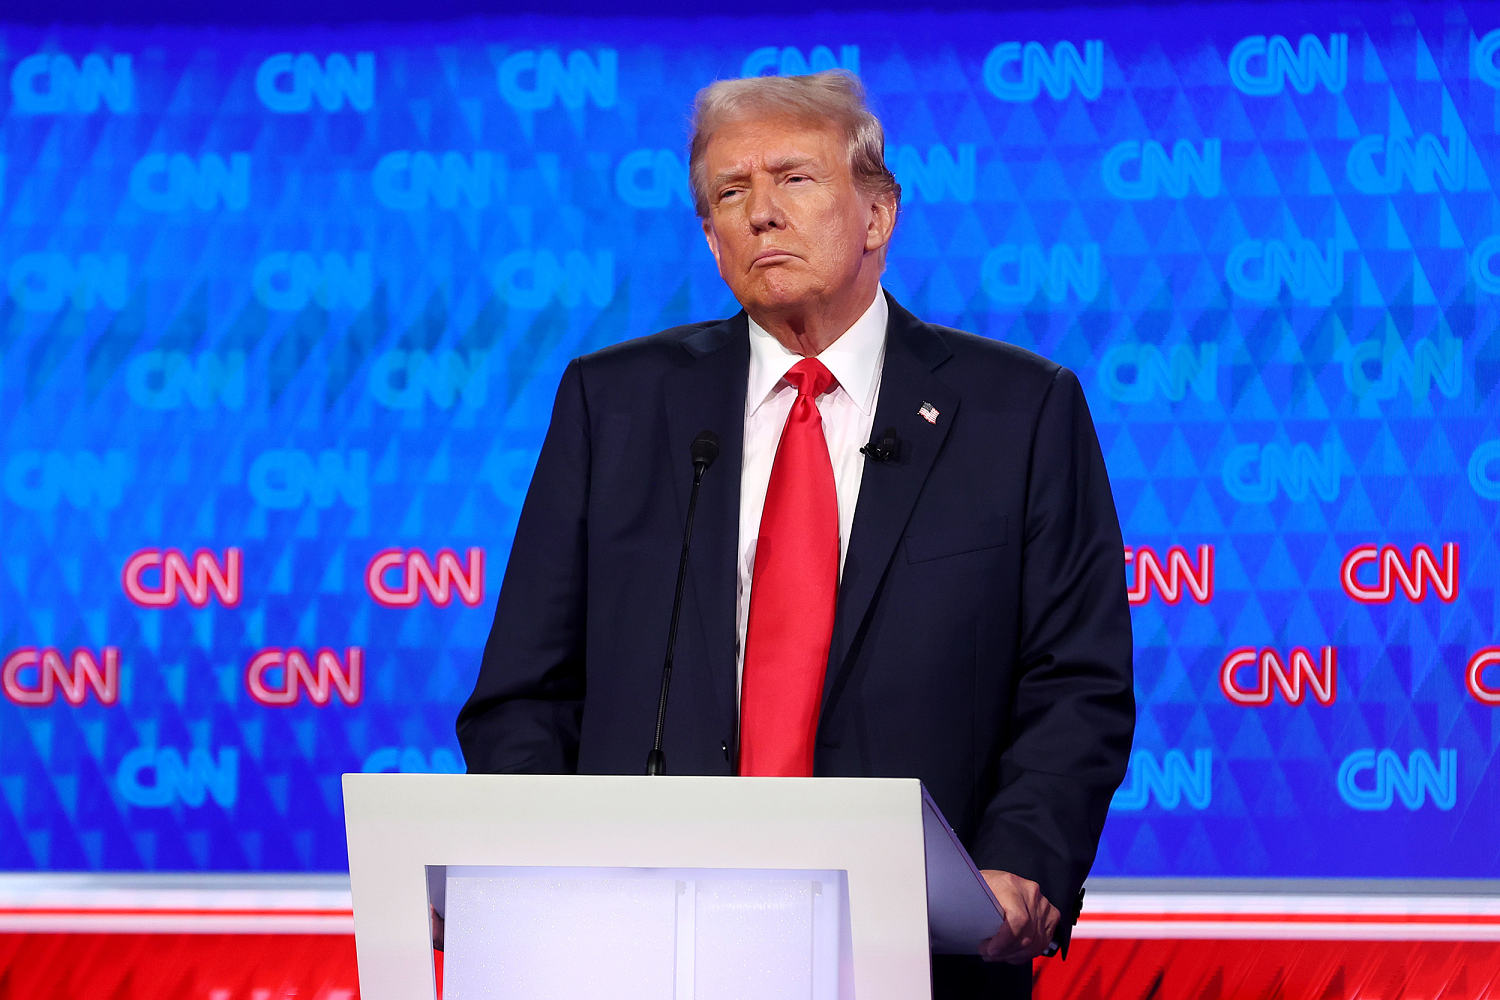 In the new 2024 race, Trump hedges on debating Kamala Harris